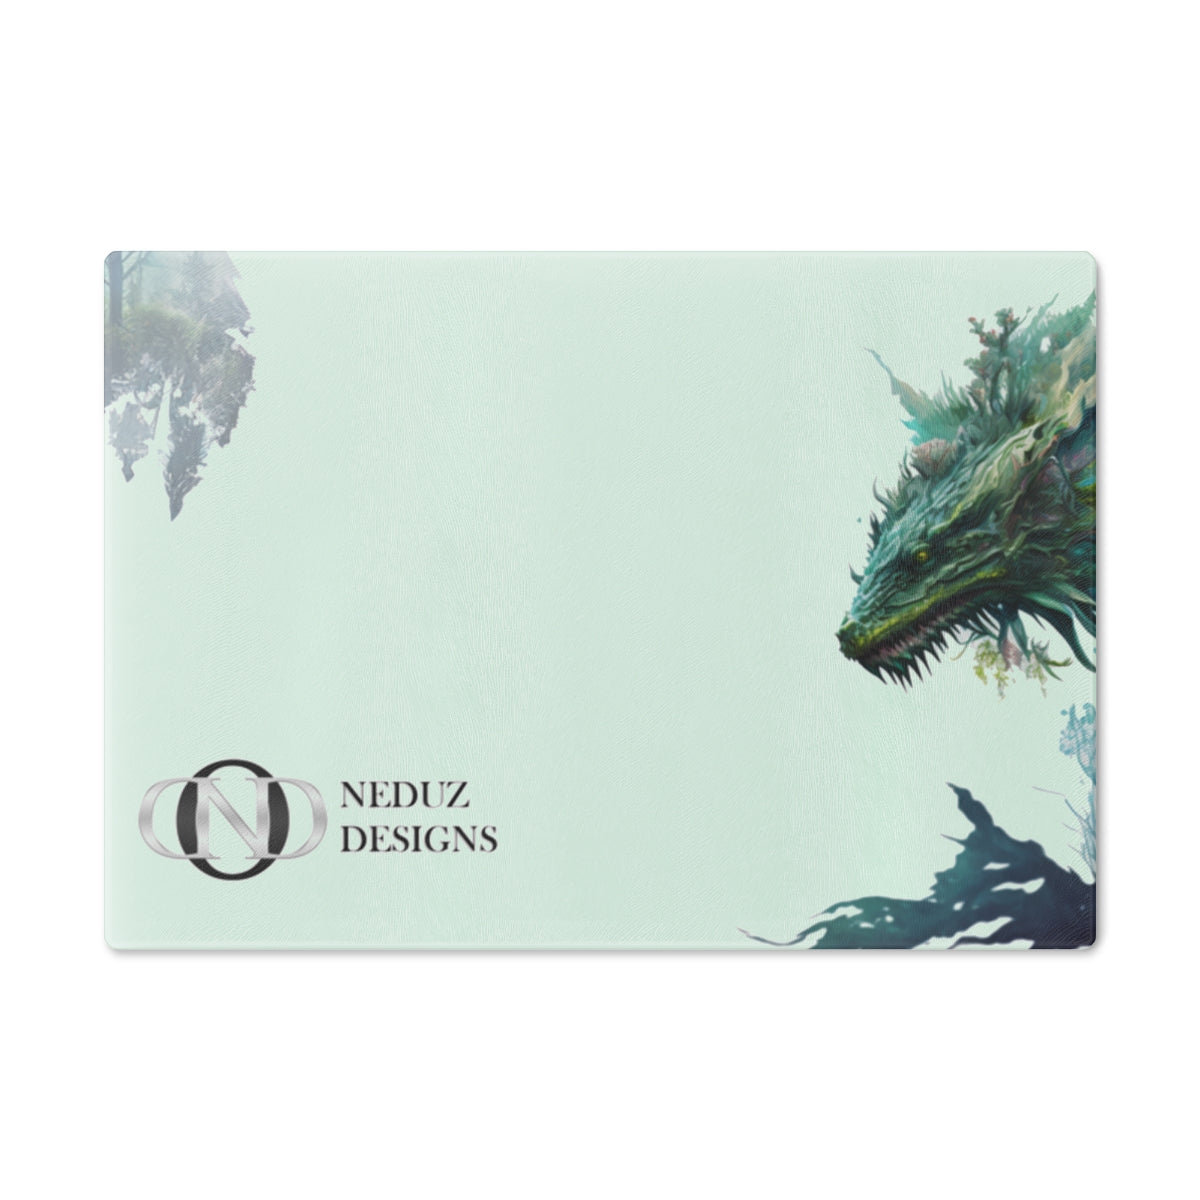 Neduz Designs Exposed Animals Sea Dragon Cutting Board